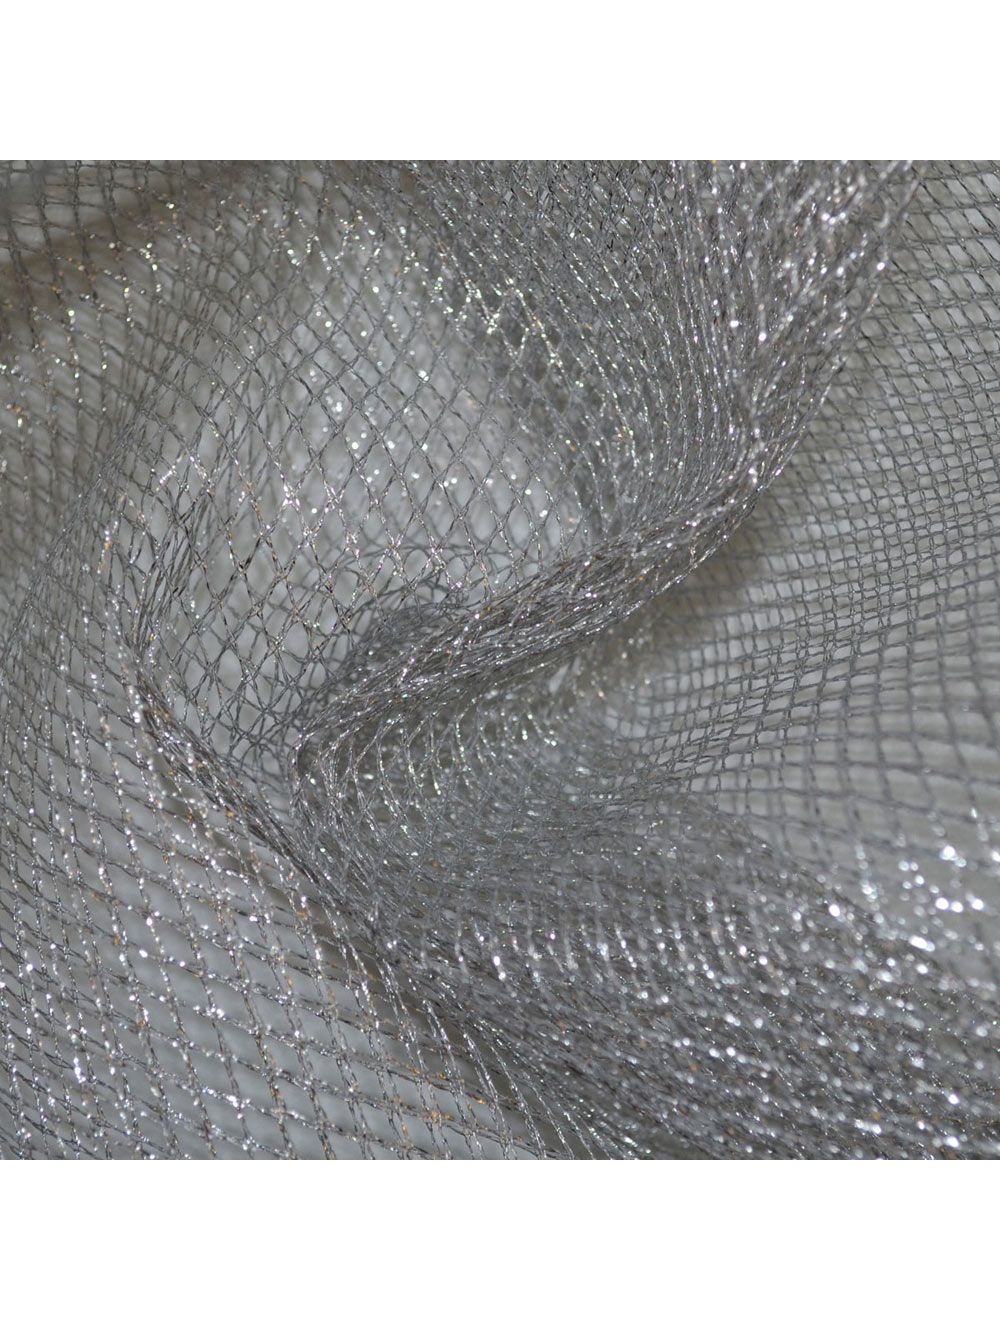 100% Nylon Dress Net Fabric Black Sold by the Metre 